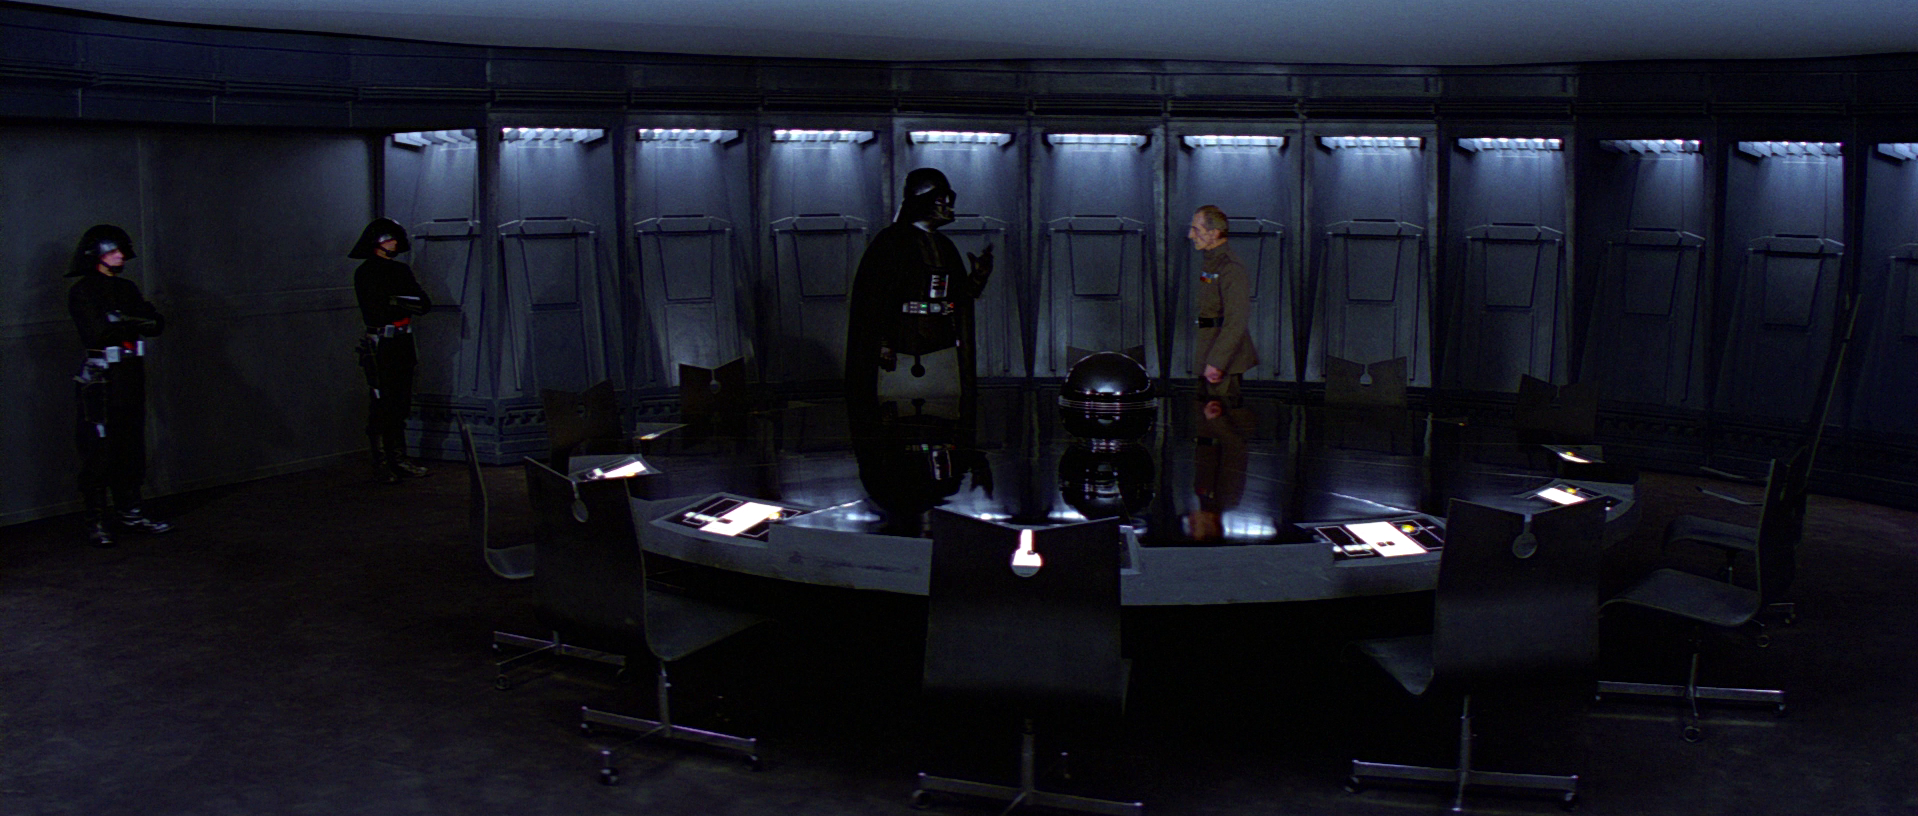 Death Star Conference Room Wookieepedia Fandom